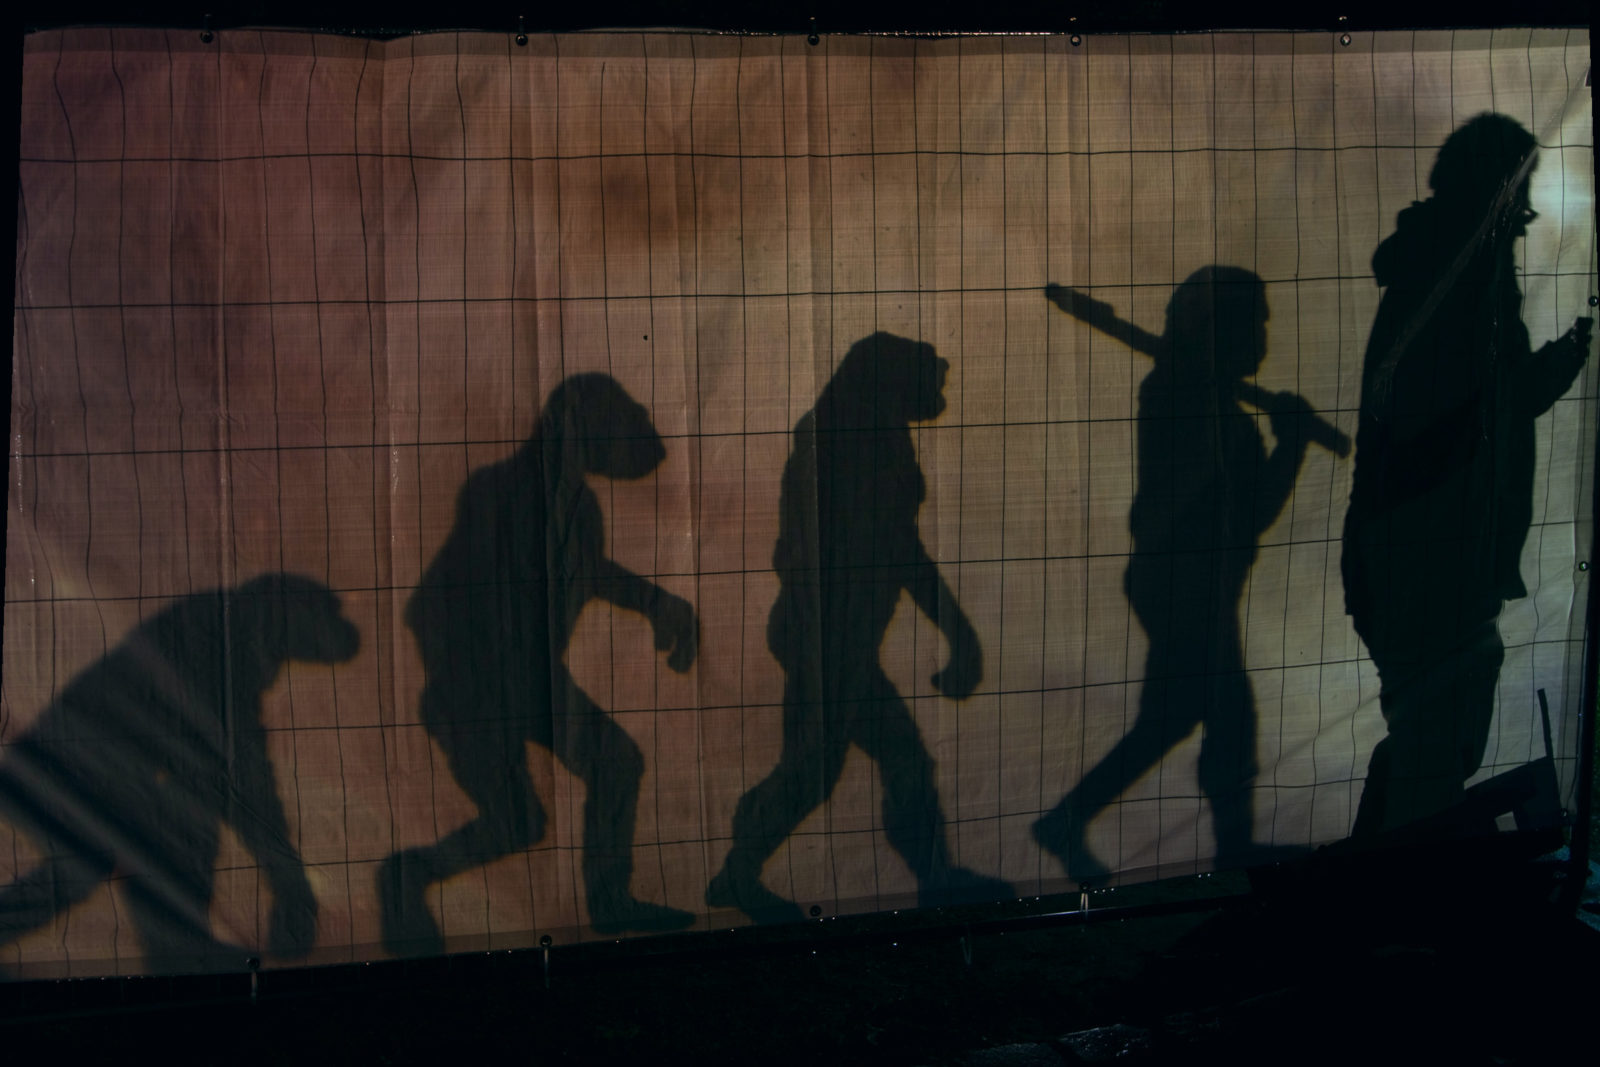 "The March of Progress" human evolution shadow art